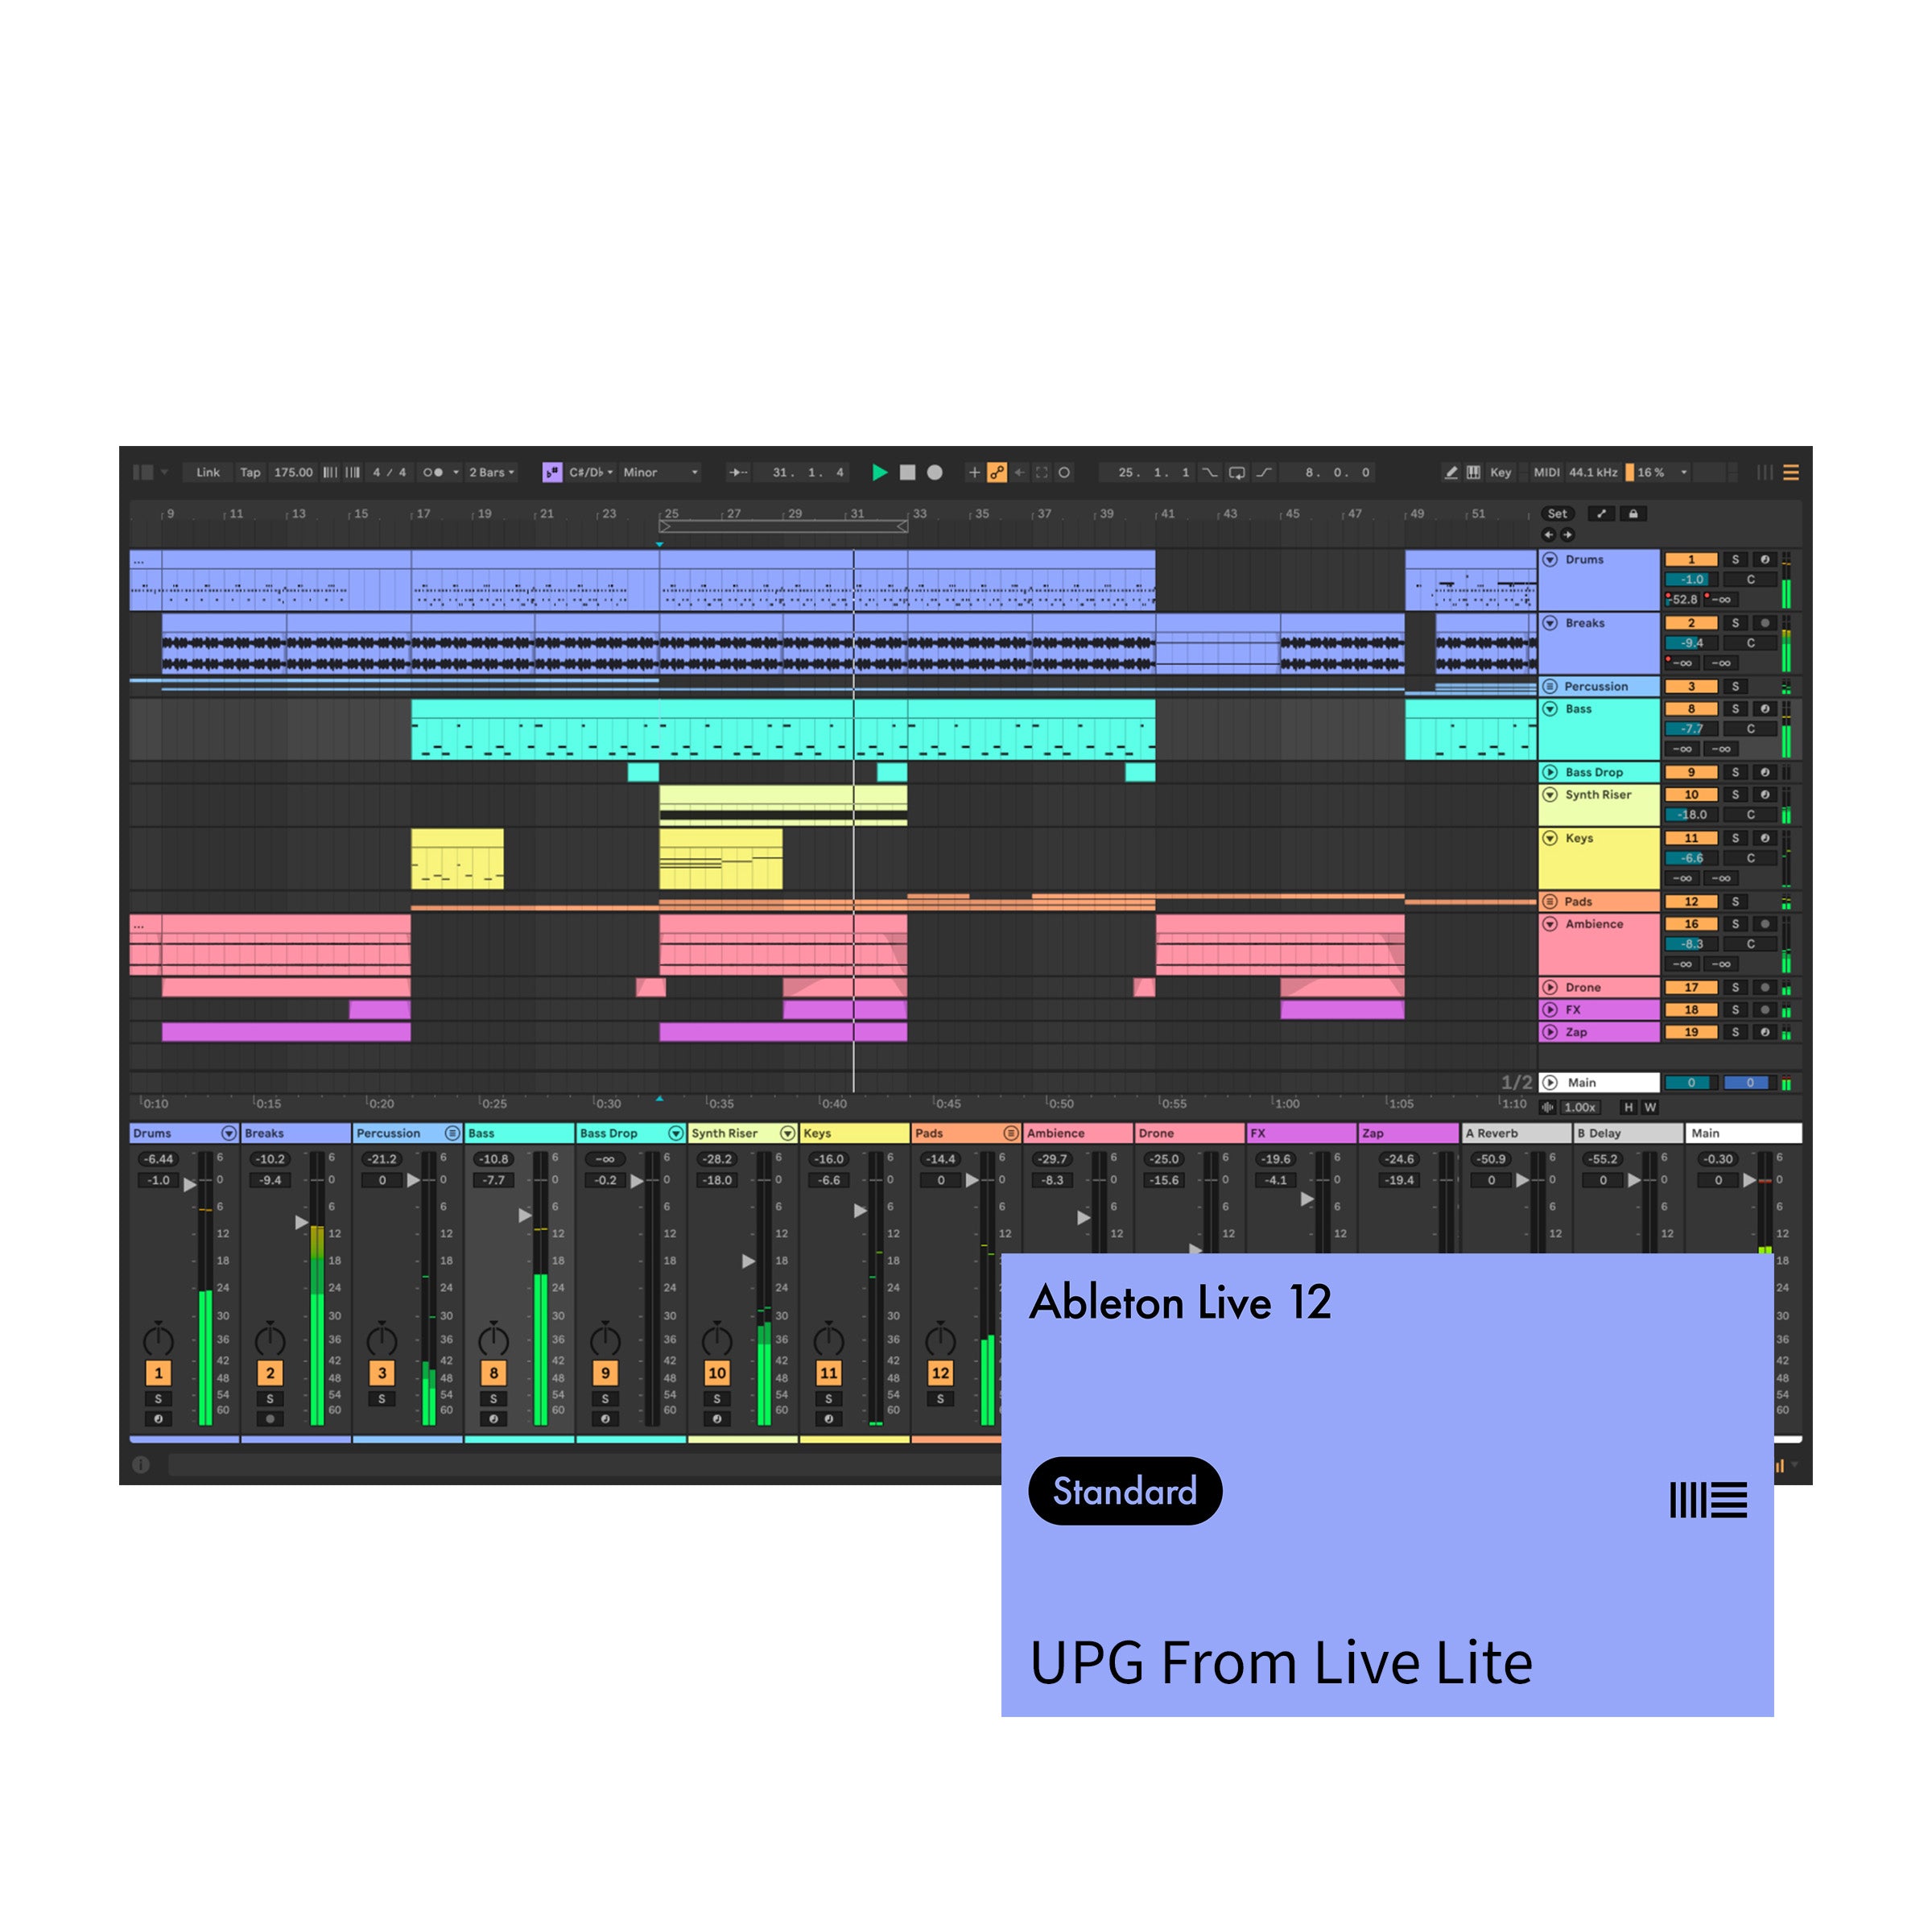 Ableton Live 12 Standard UPG from Live Lite